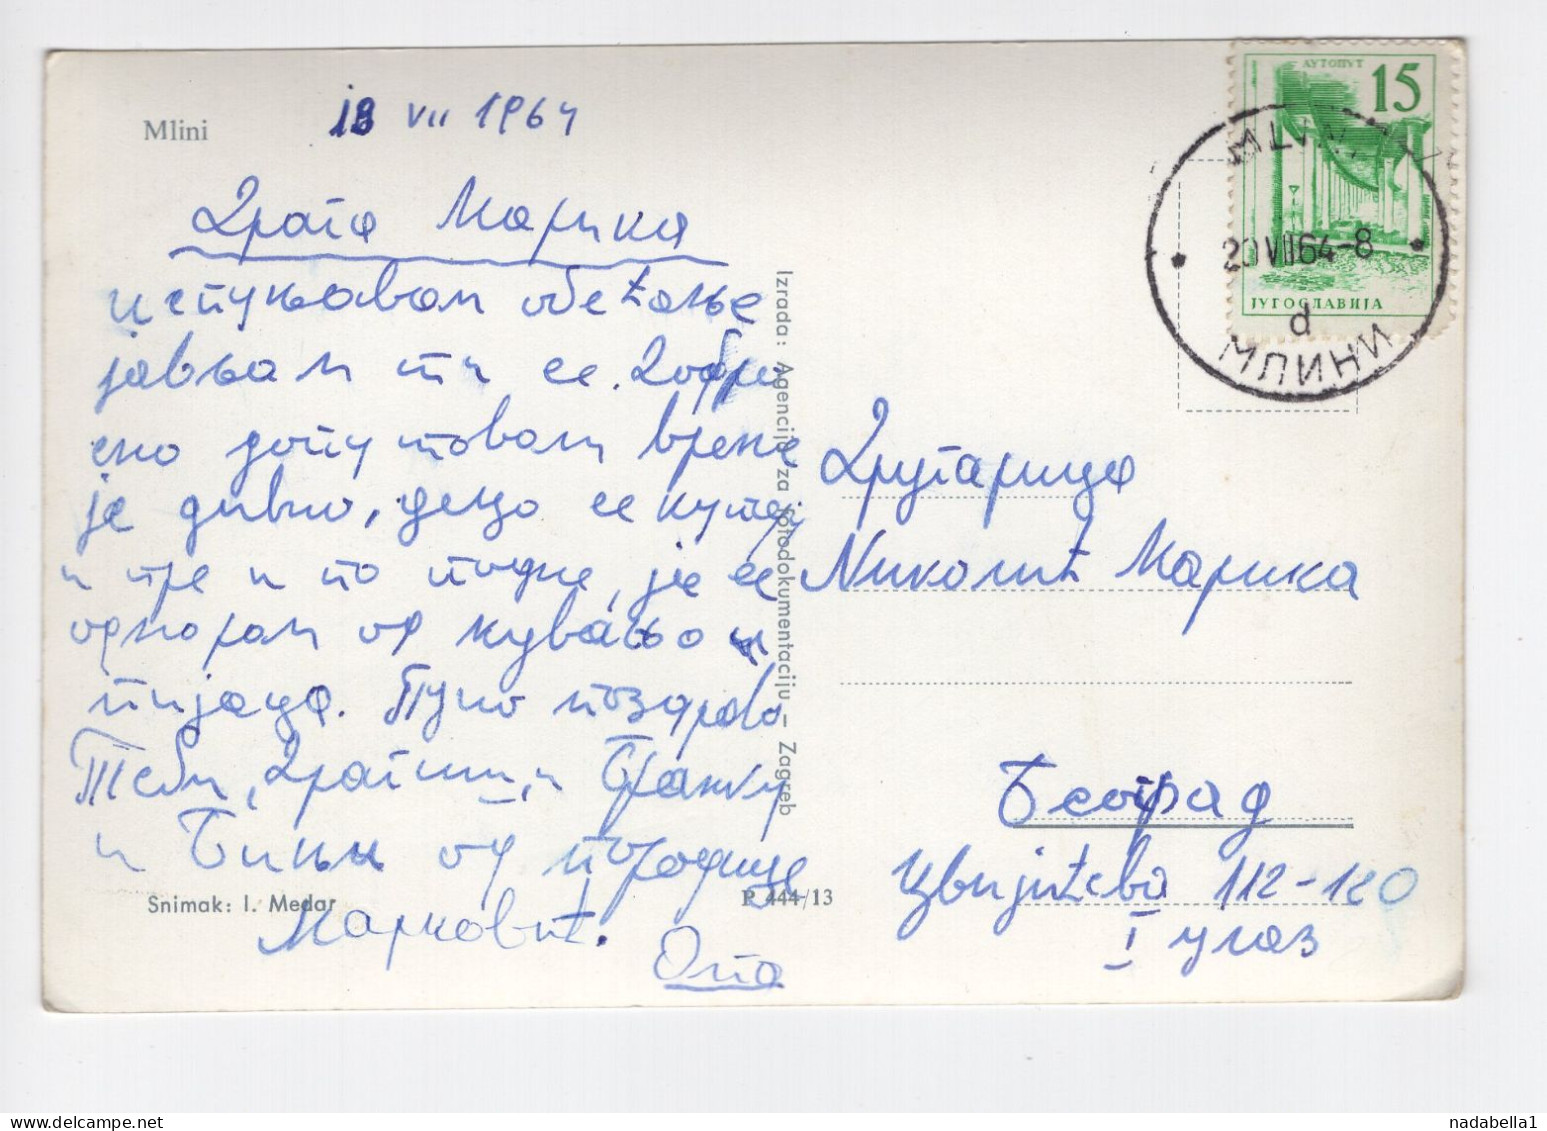 1964. YUGOSLAVIA,CROATIA,MLINI,KUPARI,POSTCARD,USED - Jugoslavia